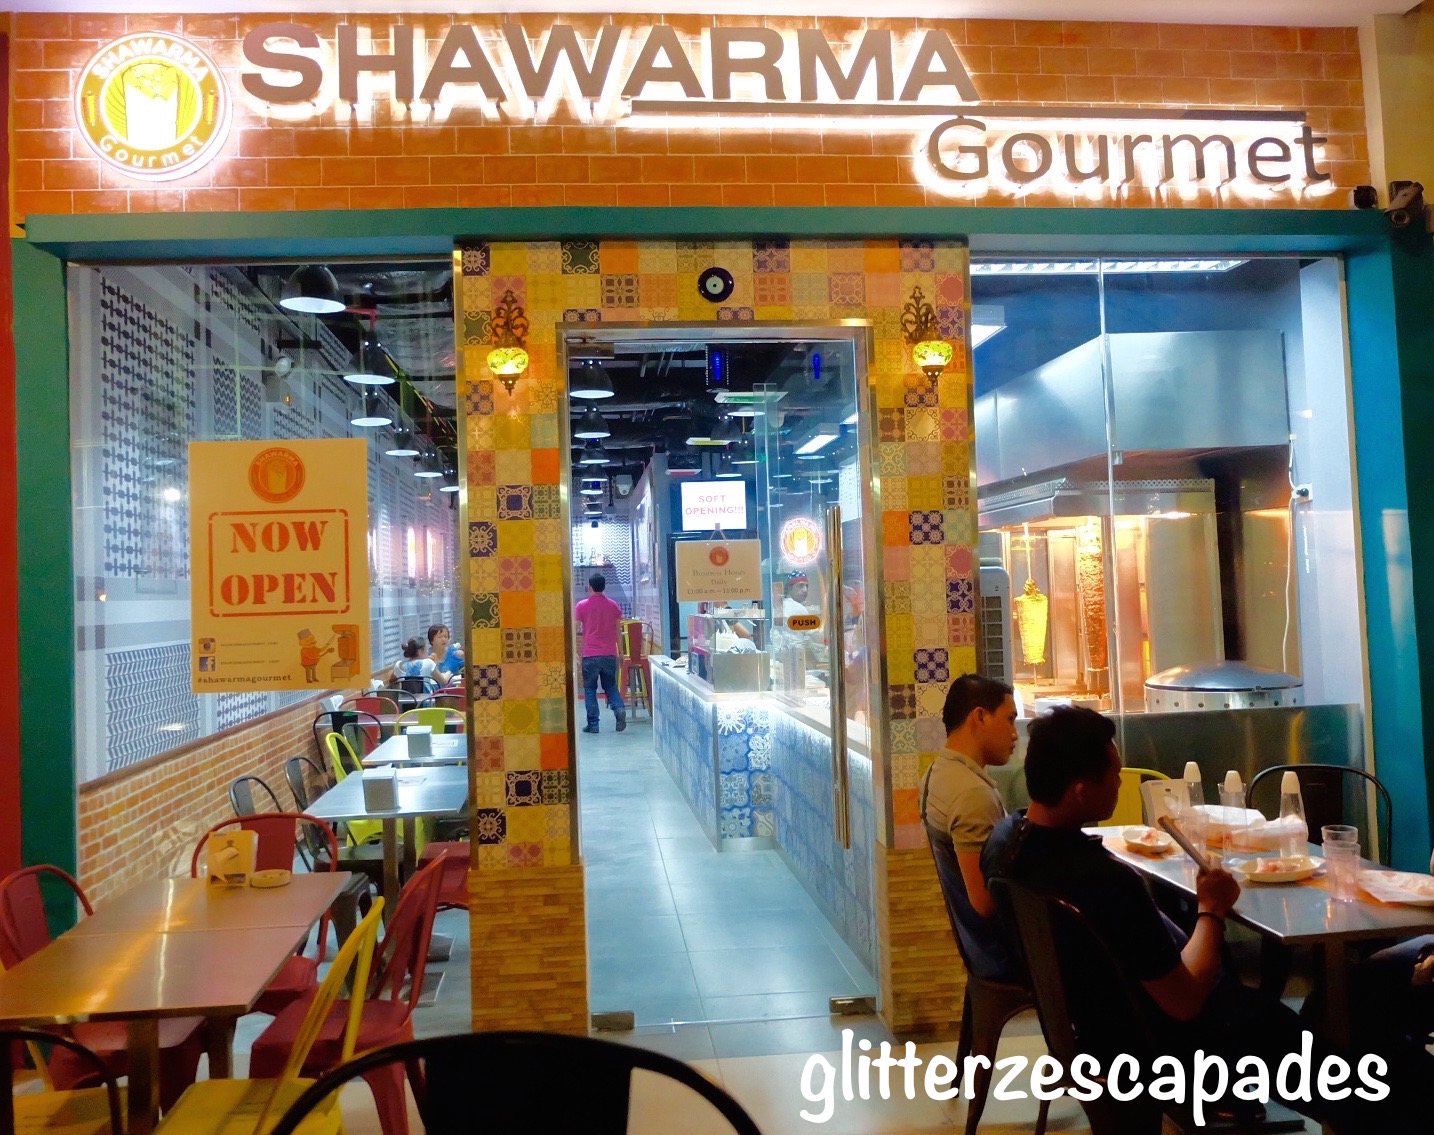 Shawarma Gourmet: Authentic Levantine Street Food